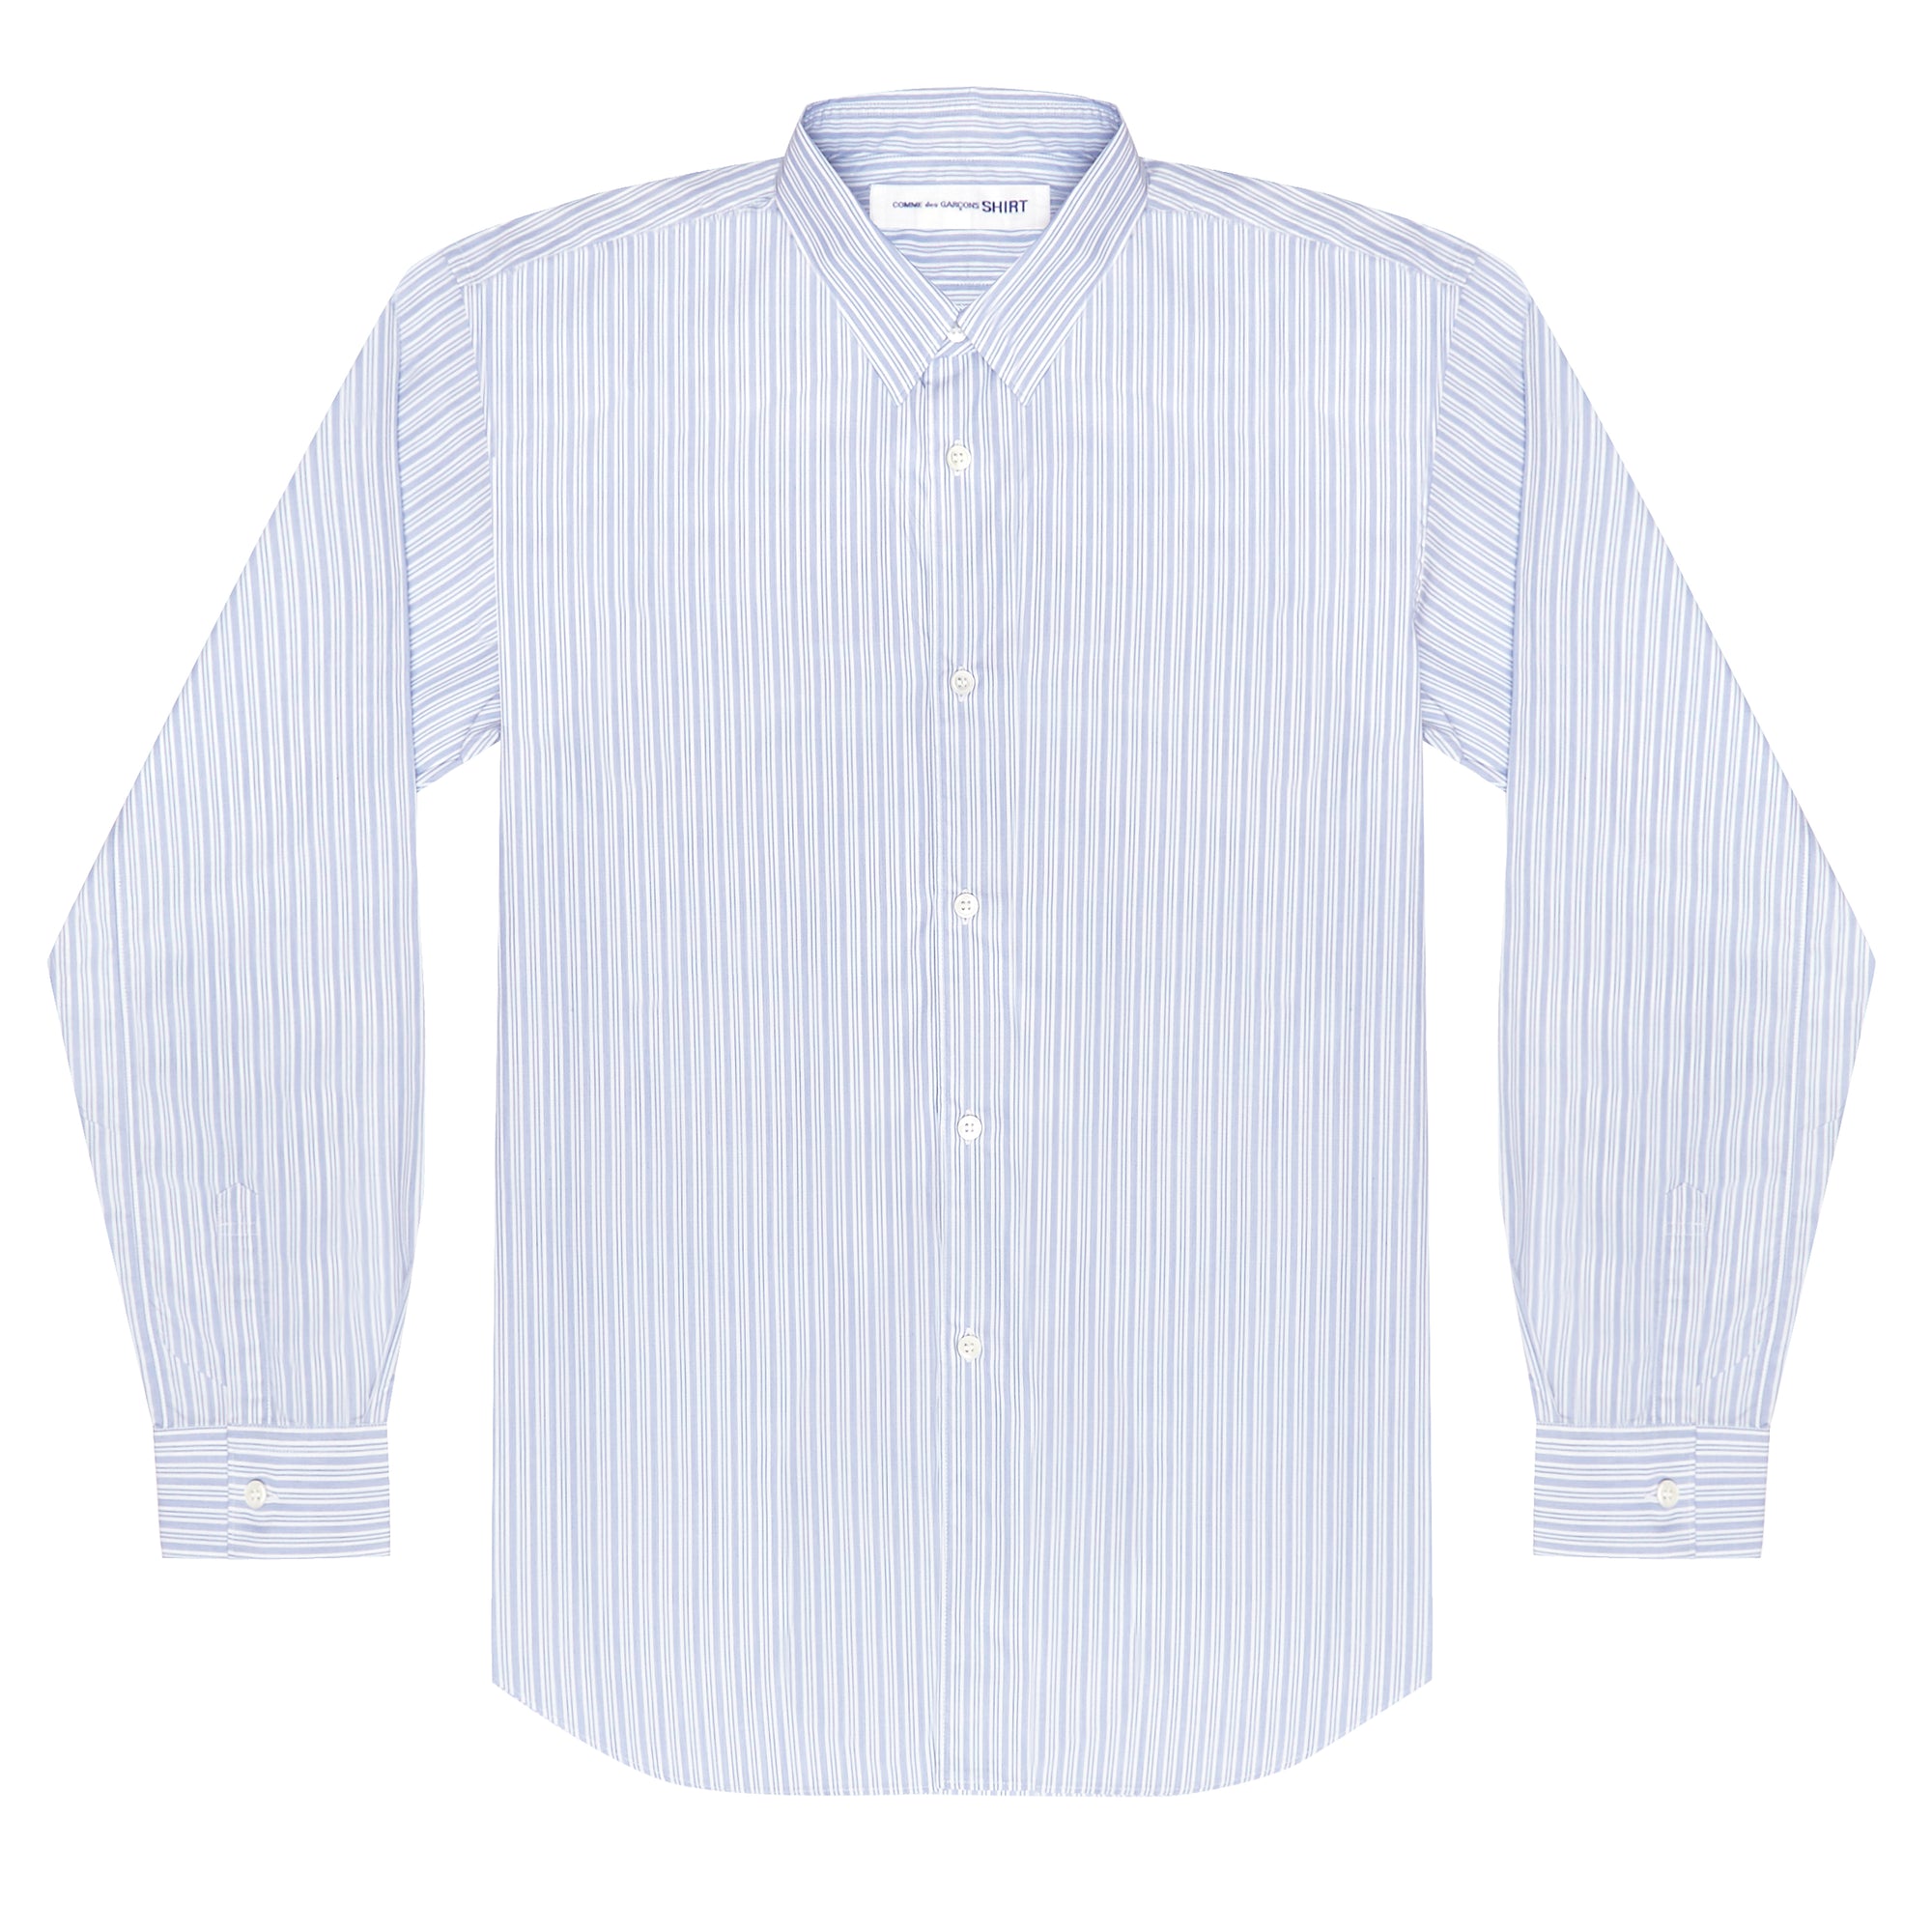 CDG SHIRT FOREVER - Cotton Shirt CDGS2STA - (46 Stripes) view 1